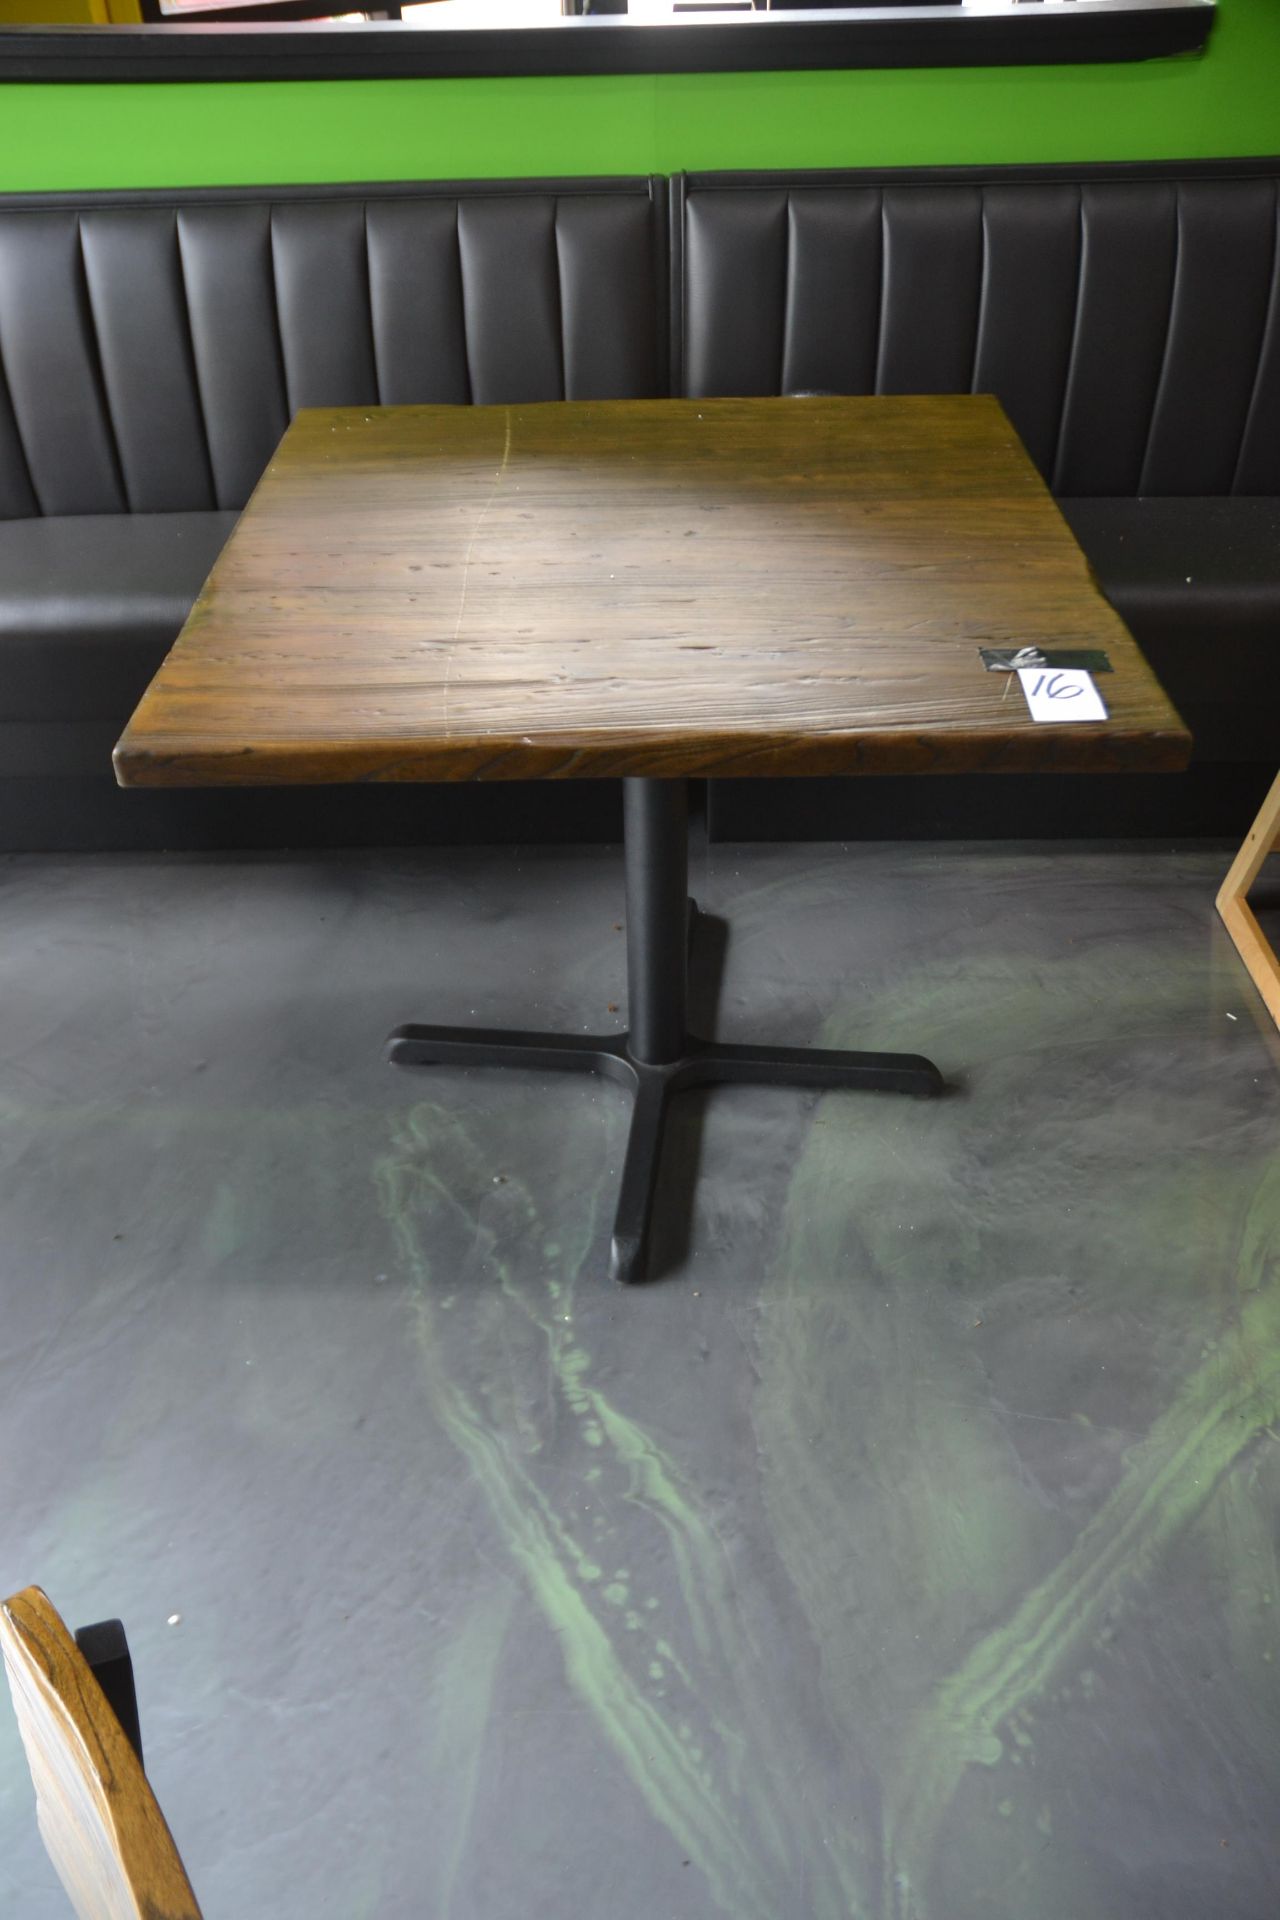 36" x 36" Wood Top Single Pedestal Tables